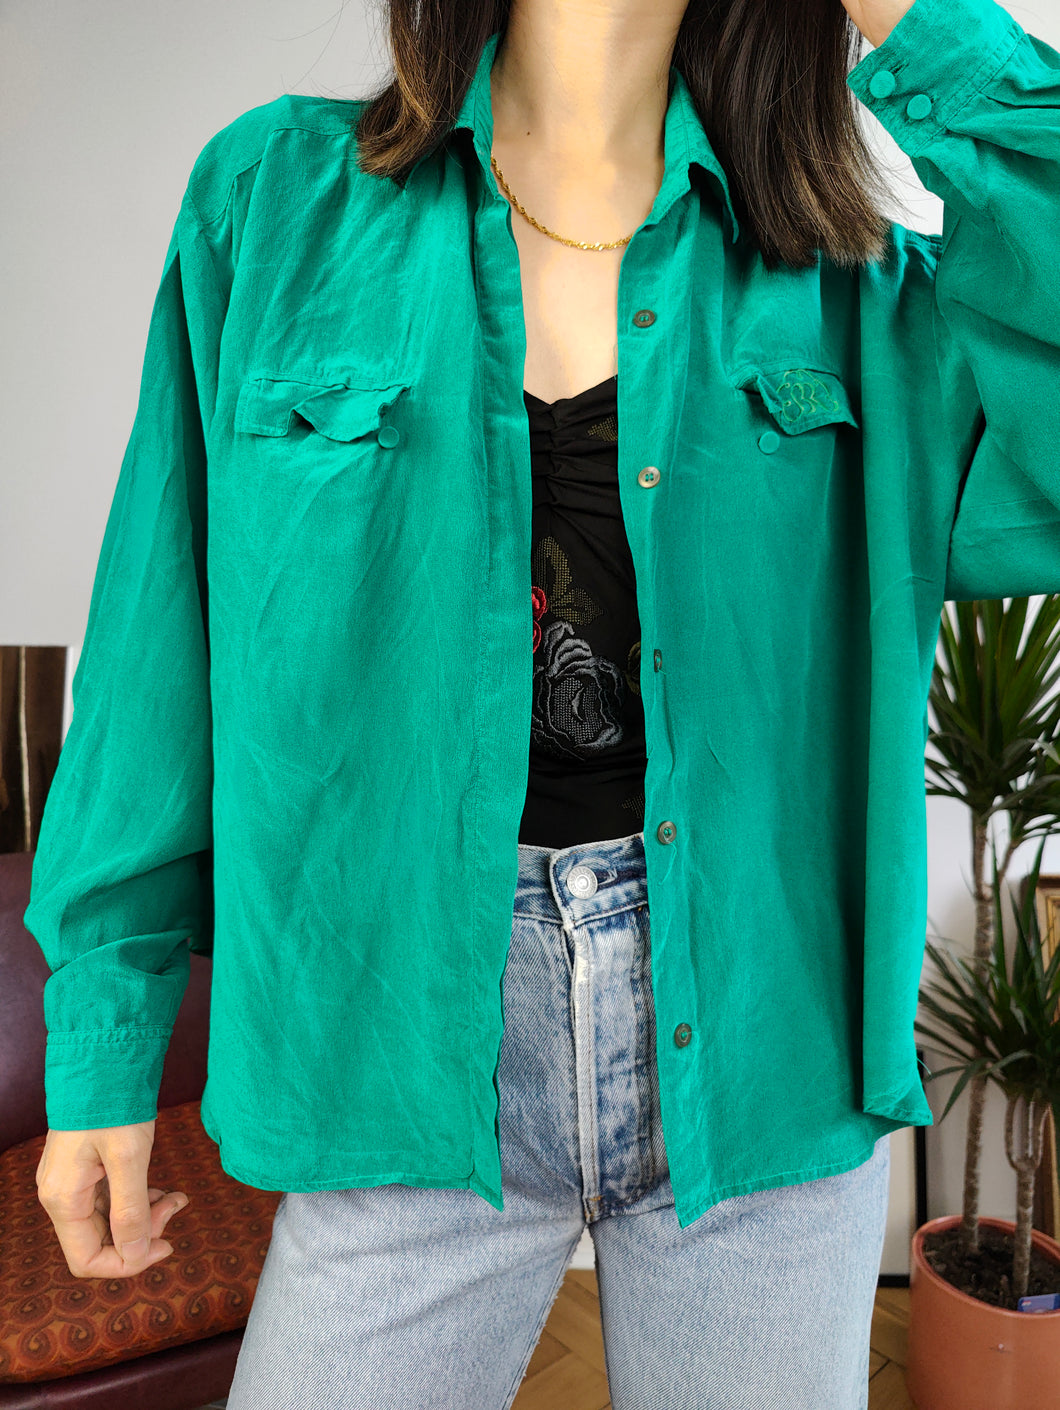 Vintage silk blouse shirt turquoise green plain long sleeve button up women S-M